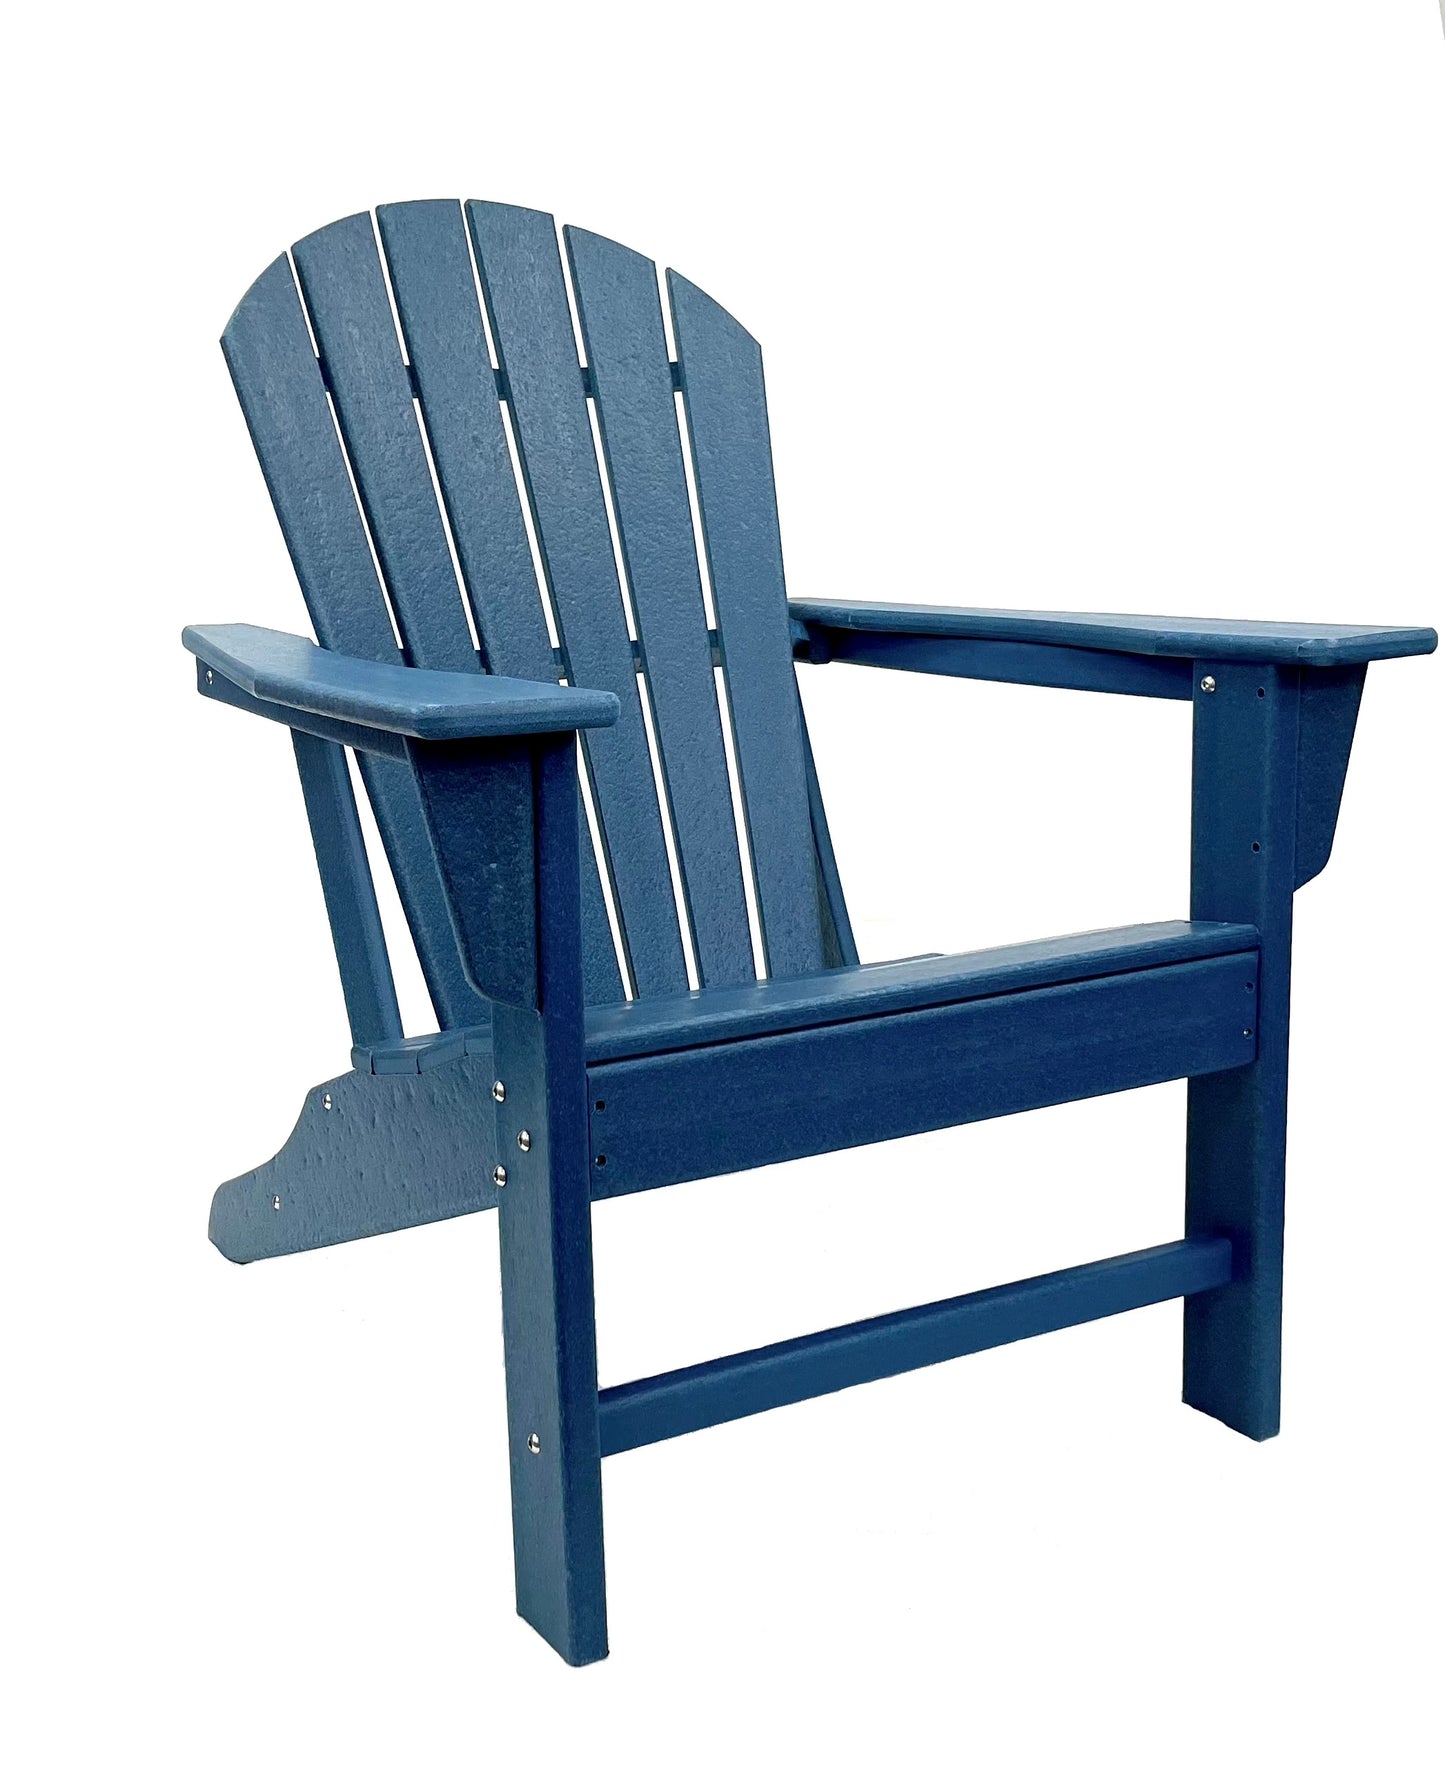 Adirondack Chair - Classic